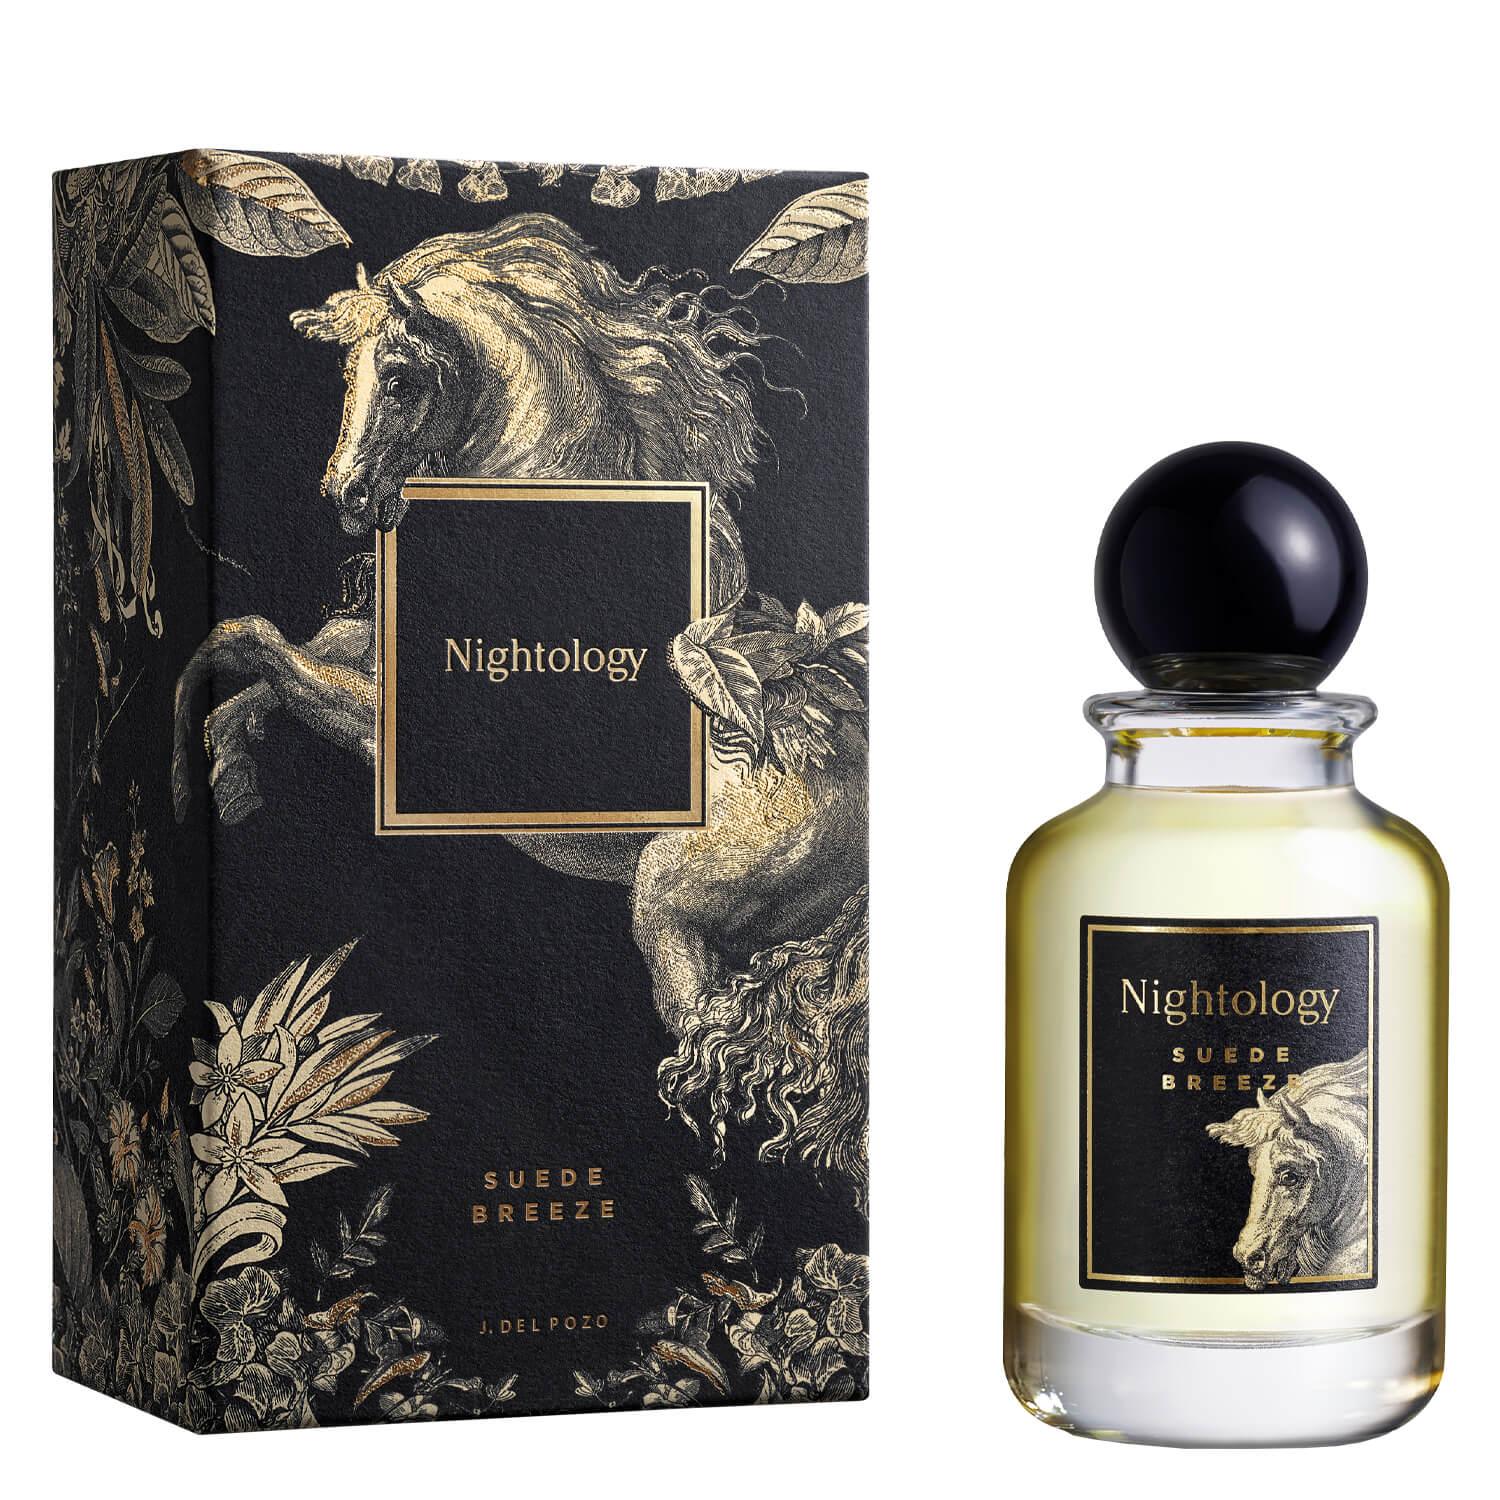 Nightology - Suede Breeze Eau de Parfum